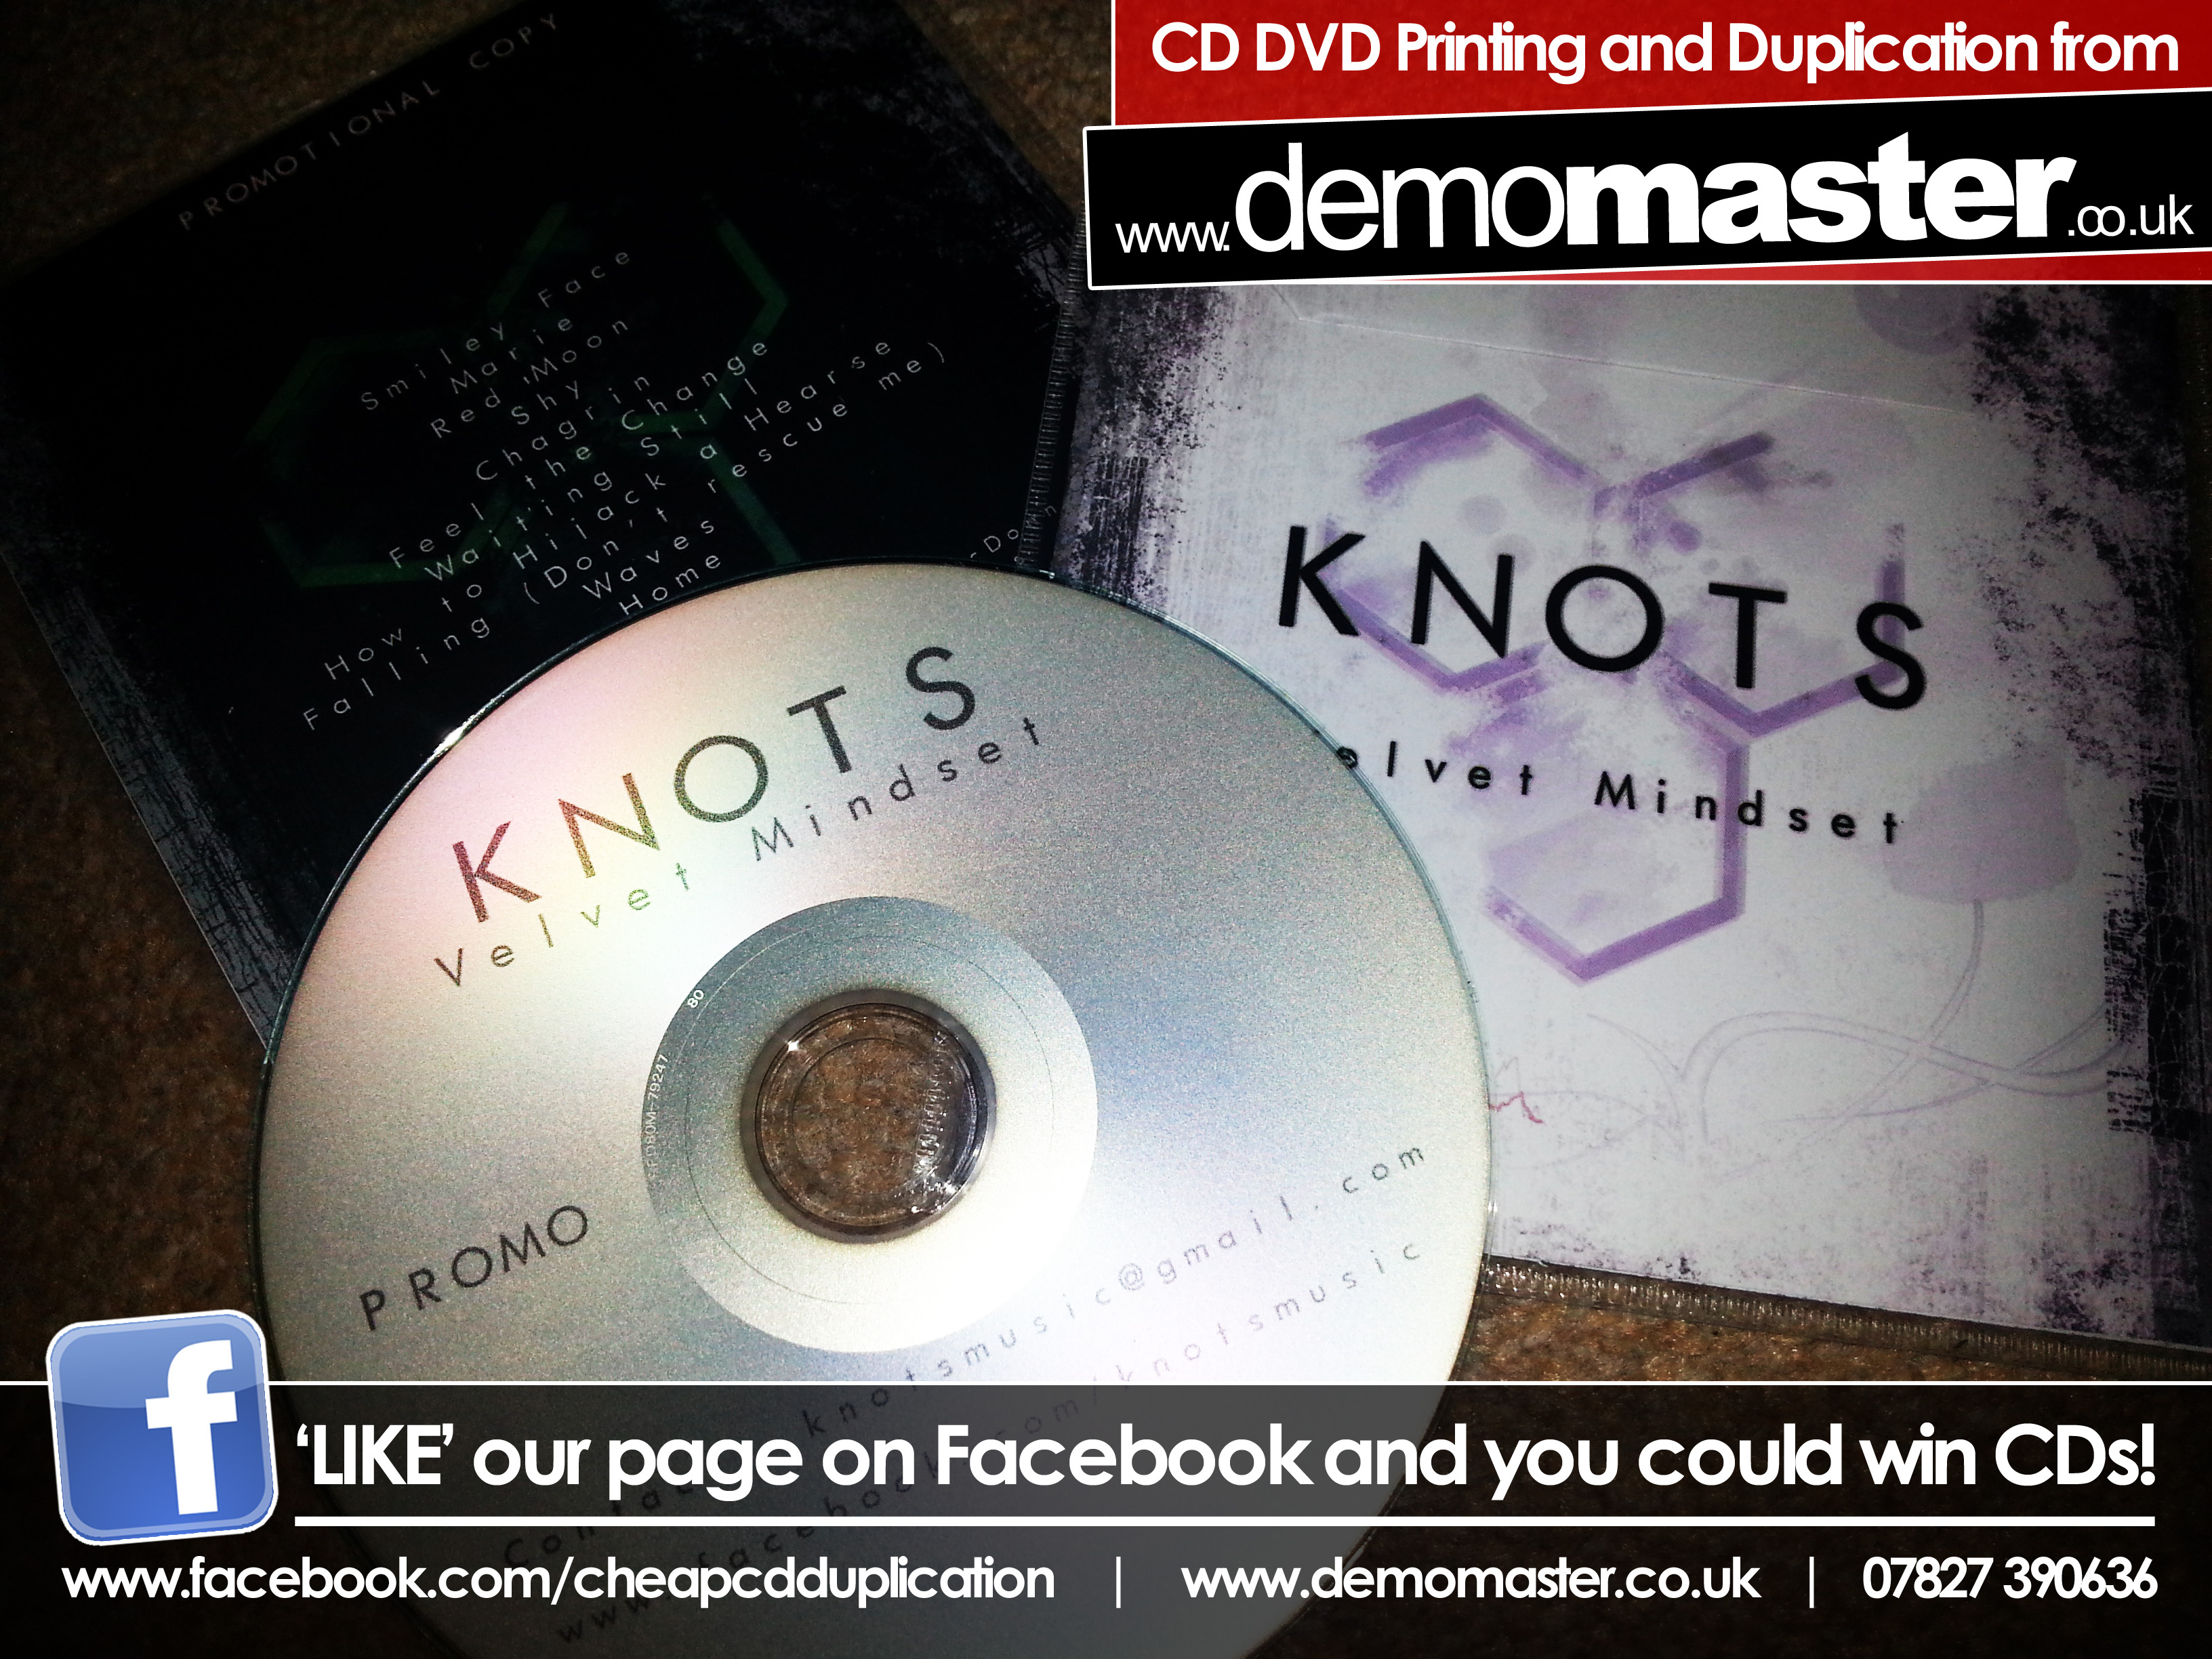 Knots - Velvet Mindset Promo CD